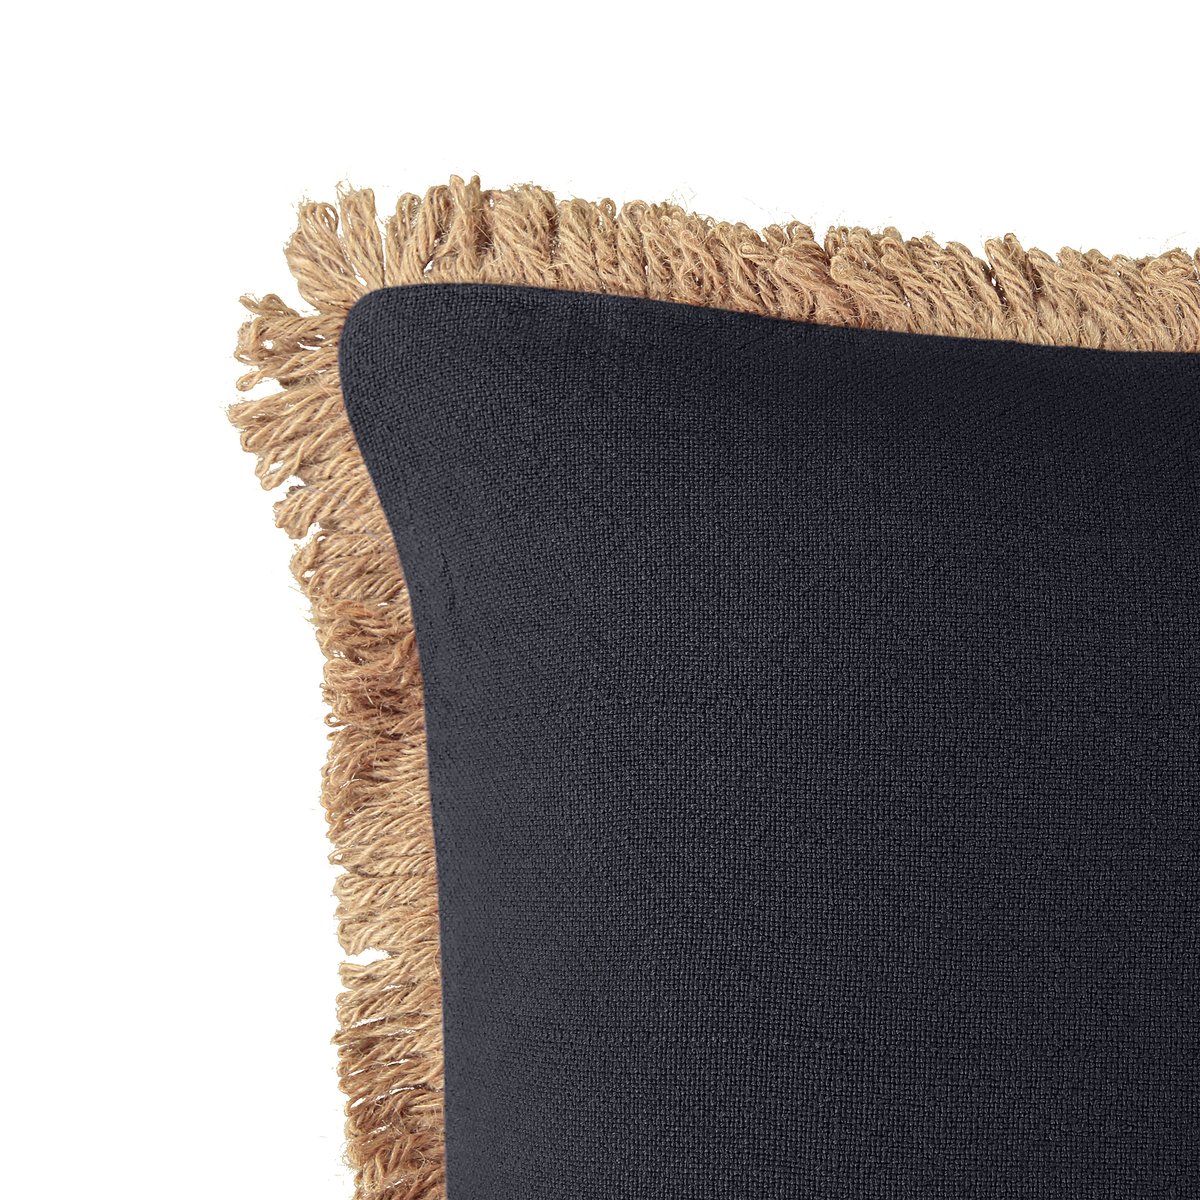 Чехол LaRedoute На подушку из джута Jutty 50 x 30 см черный, размер 50 x 30 см - фото 4